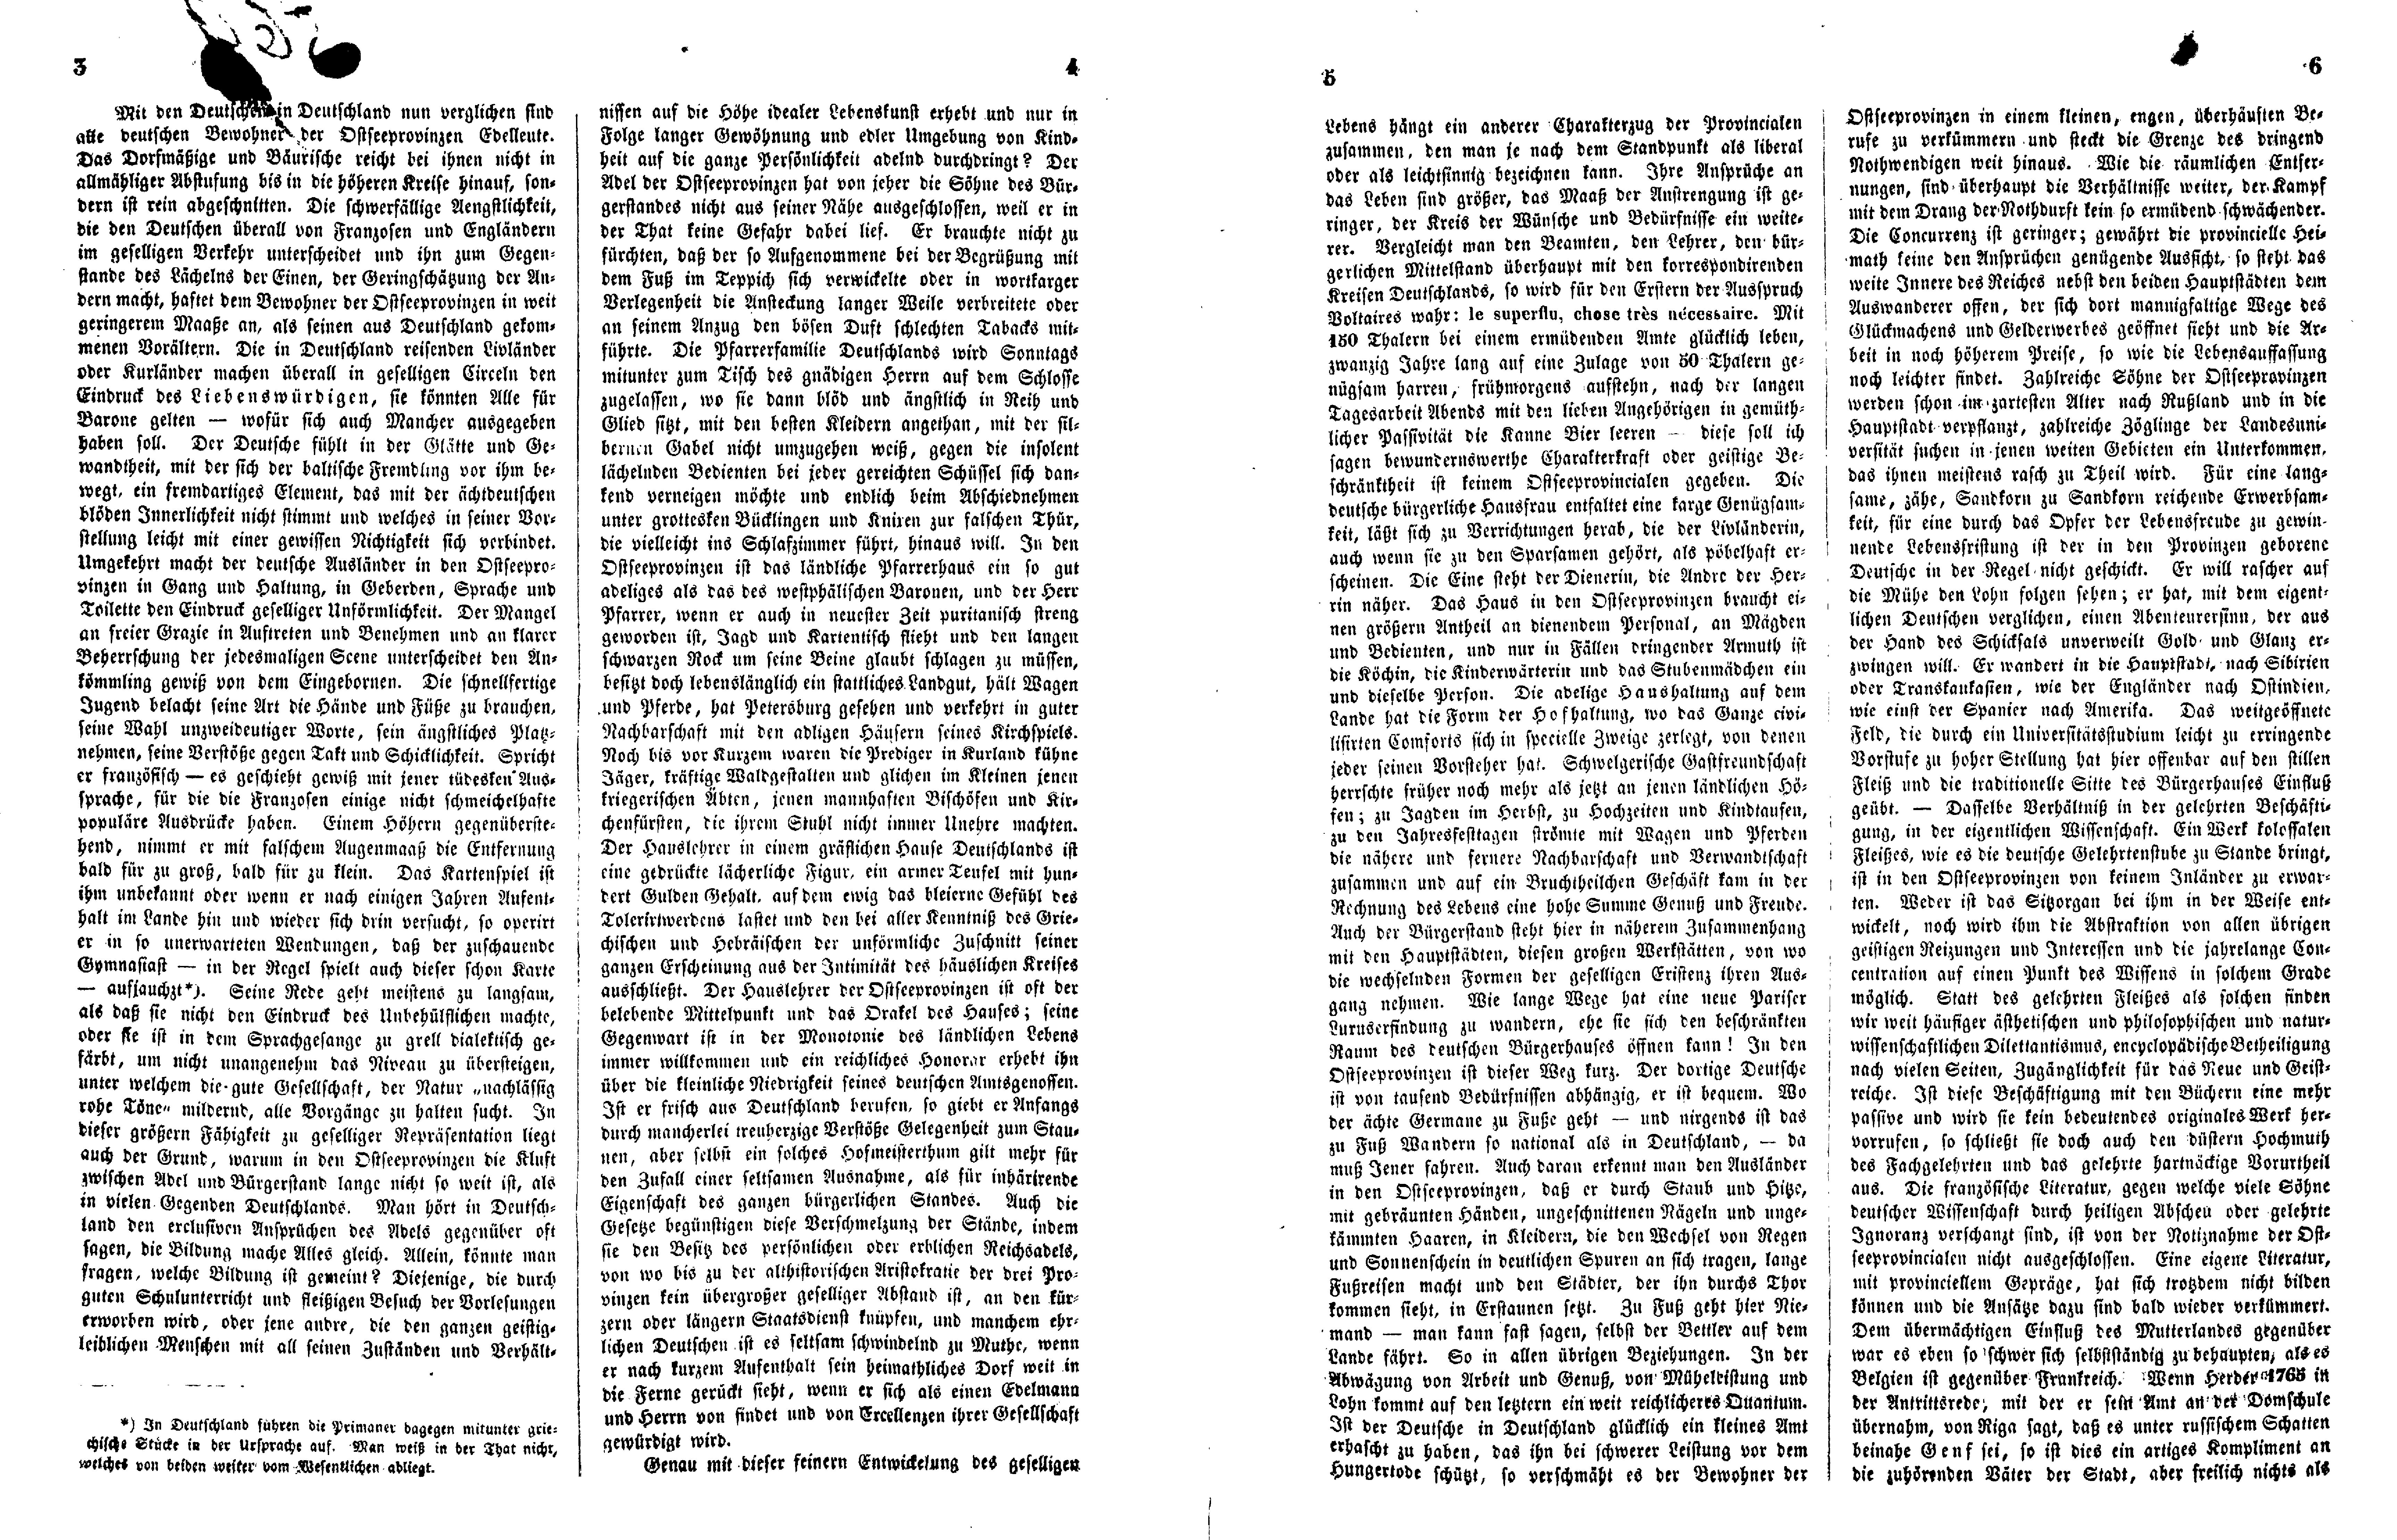 Das Inland [13] (1848) | 6. (3-6) Main body of text